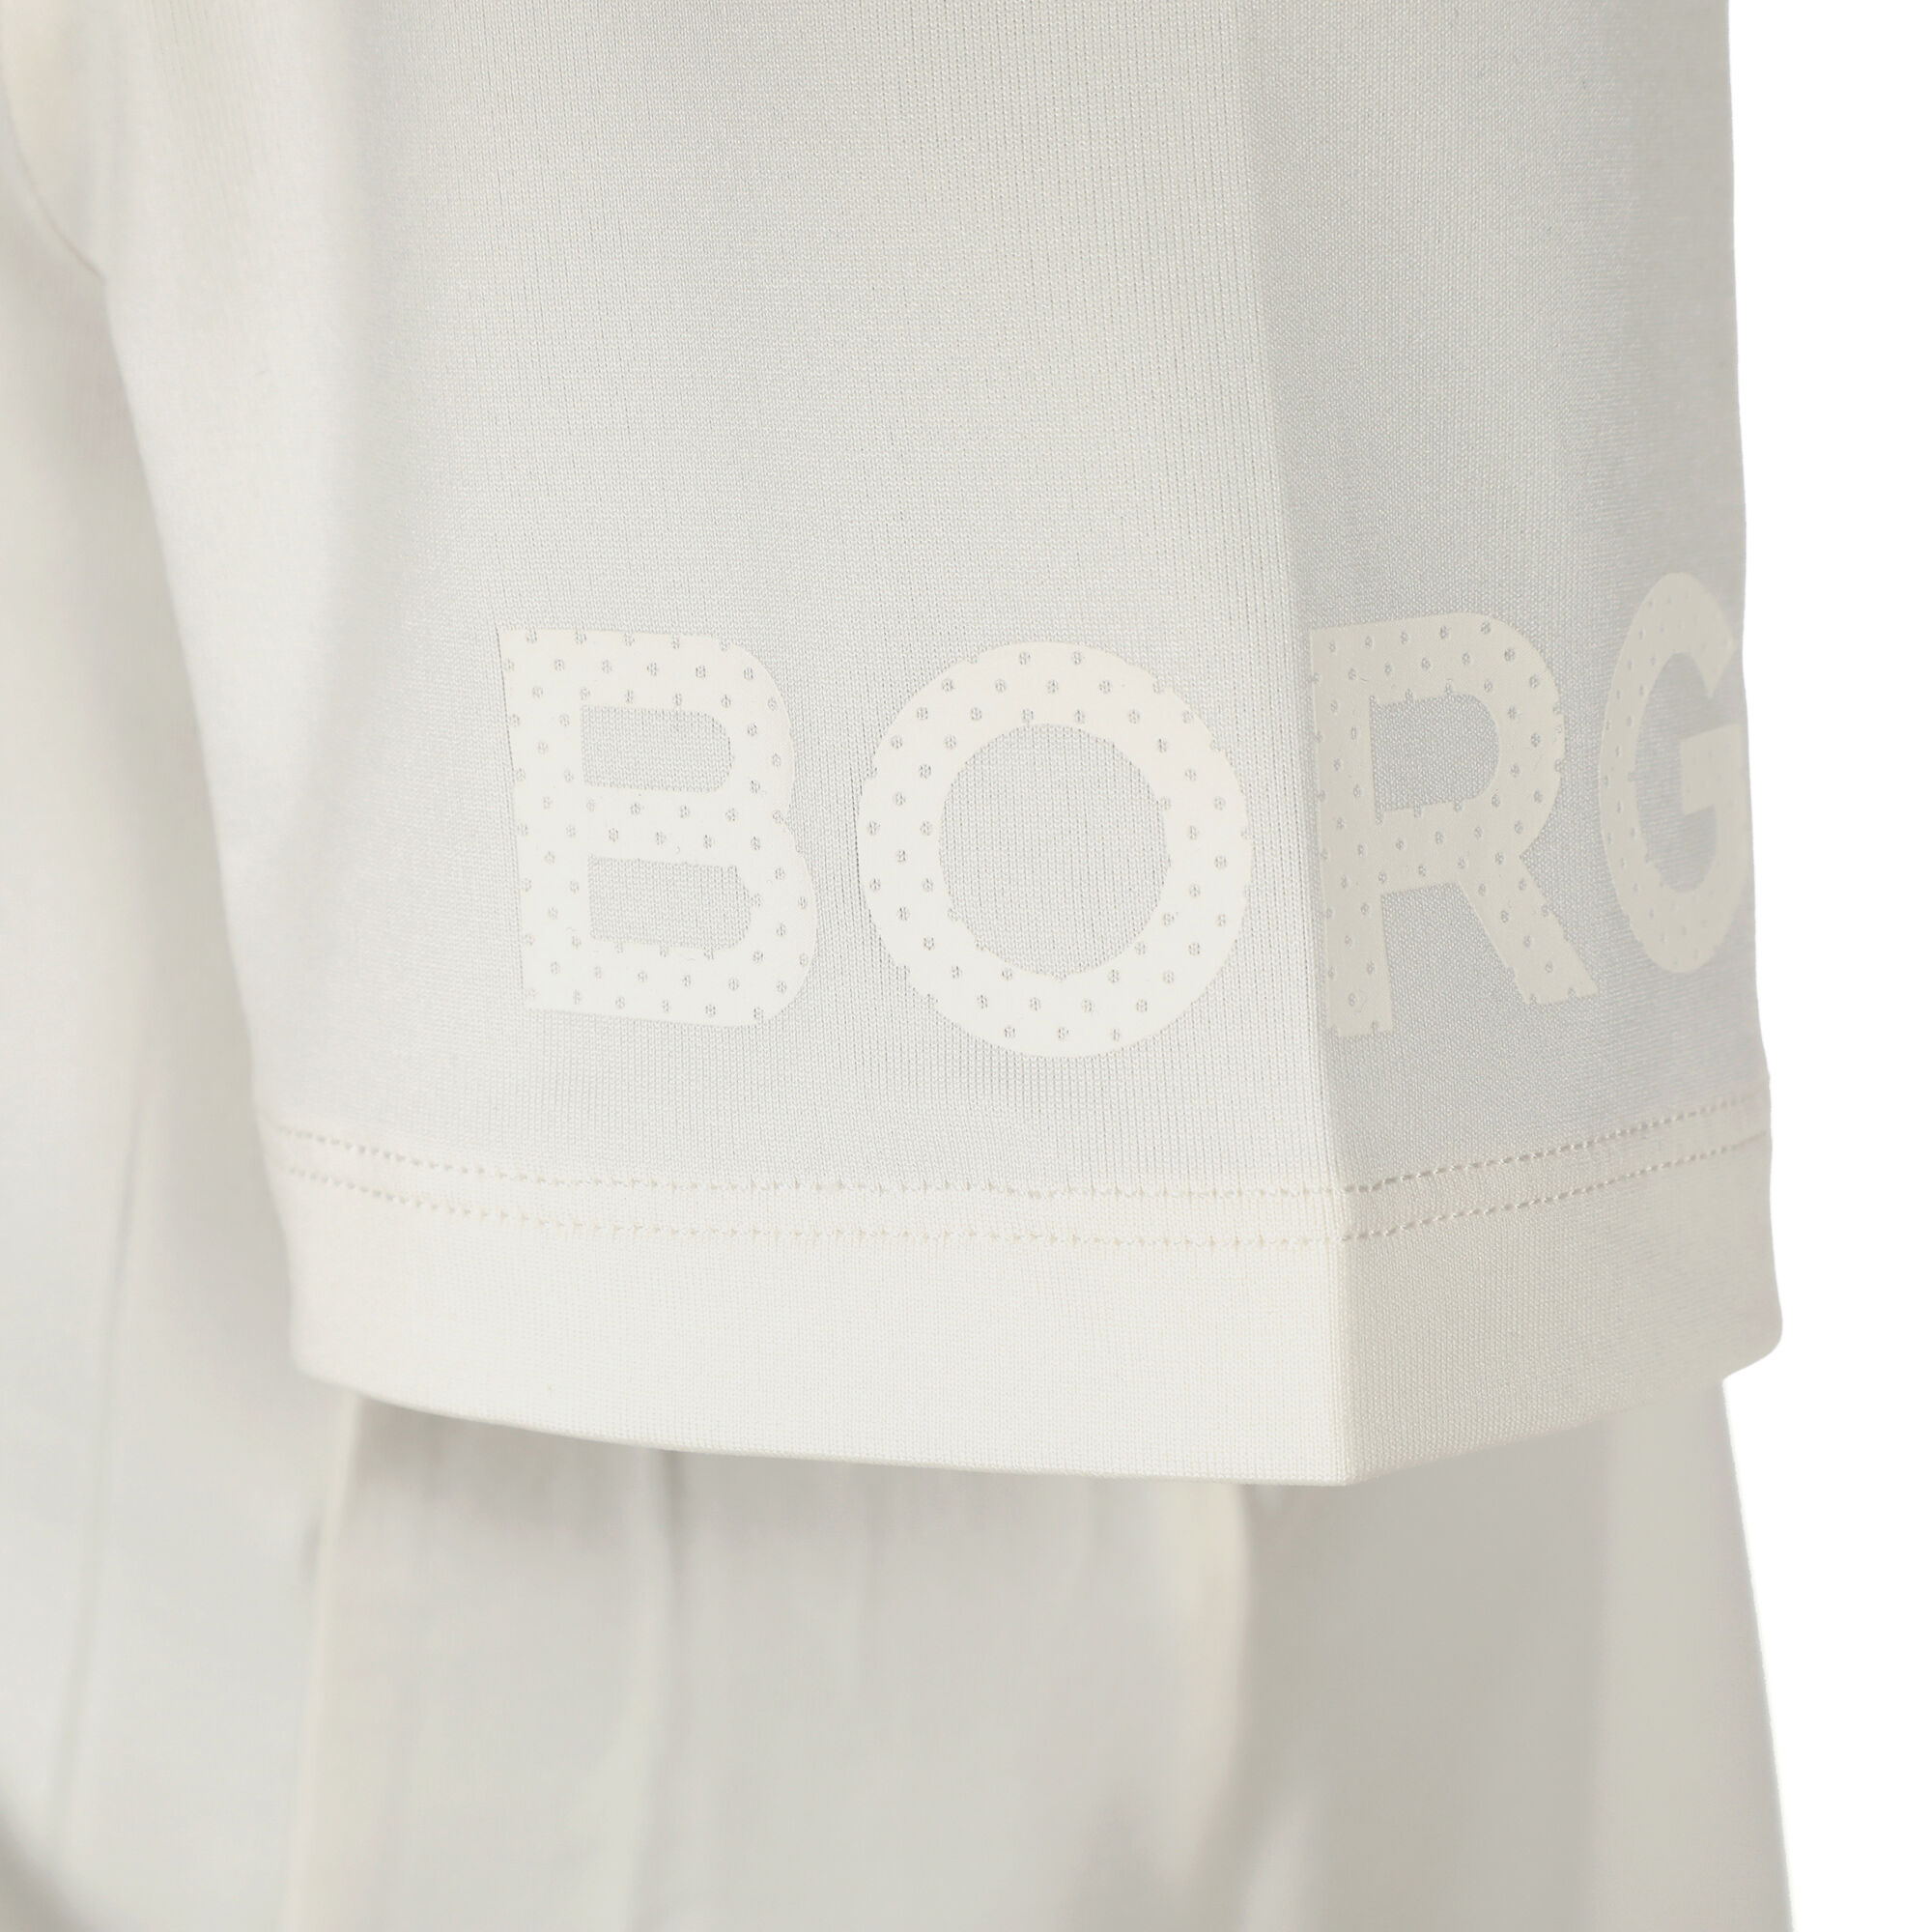 Buy Björn Borg T-Shirt Women Cream online | Tennis Point UK